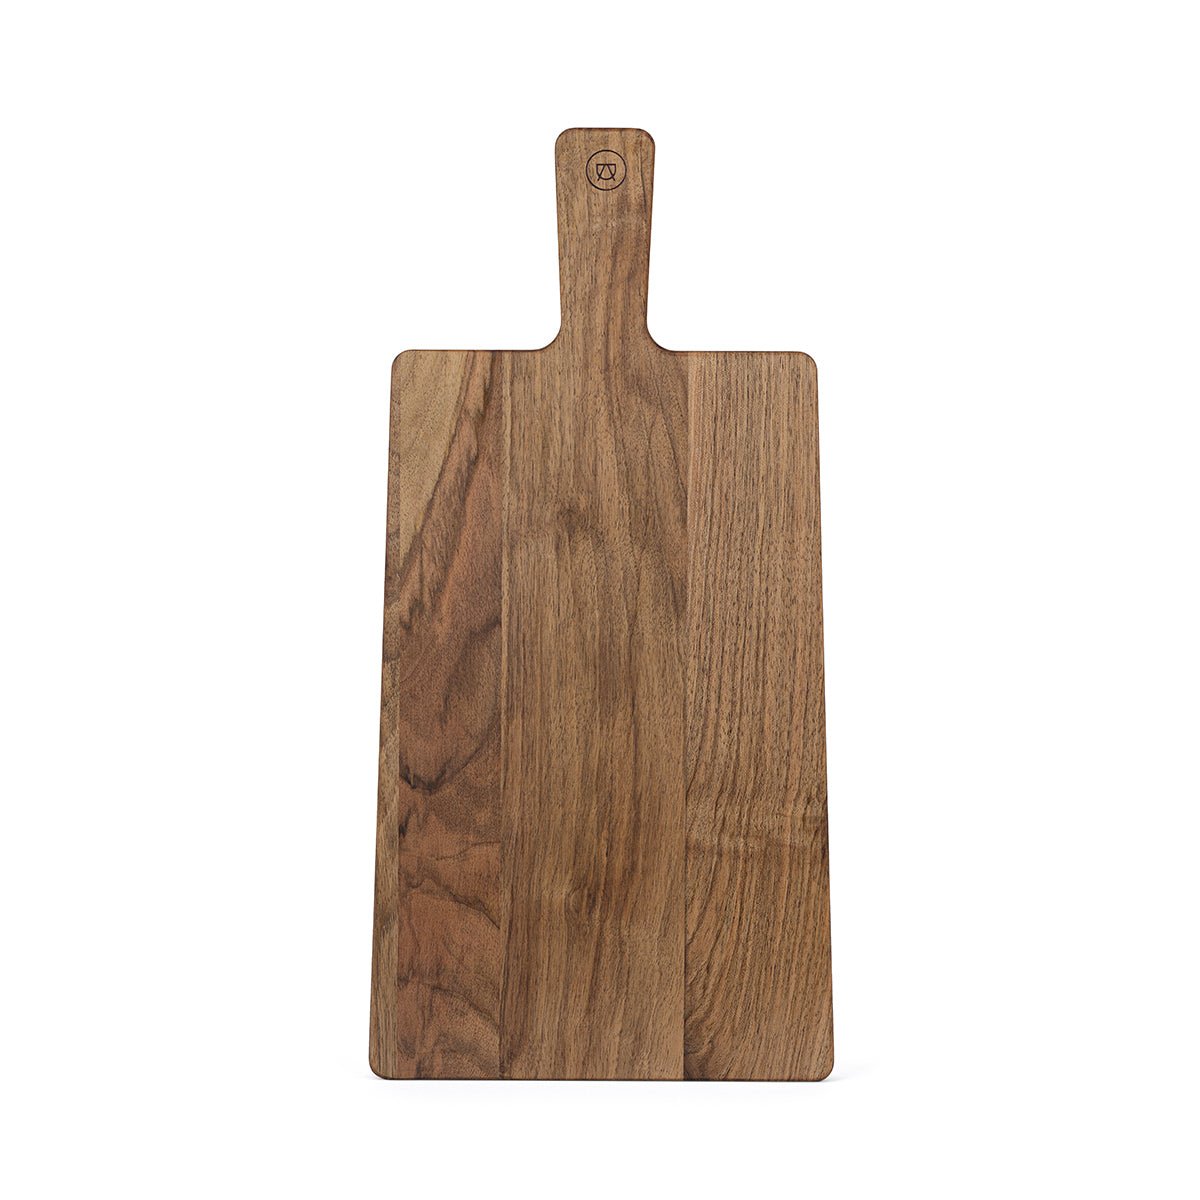 Stylish luxury - cutting board and serving board »Leni« made of walnut